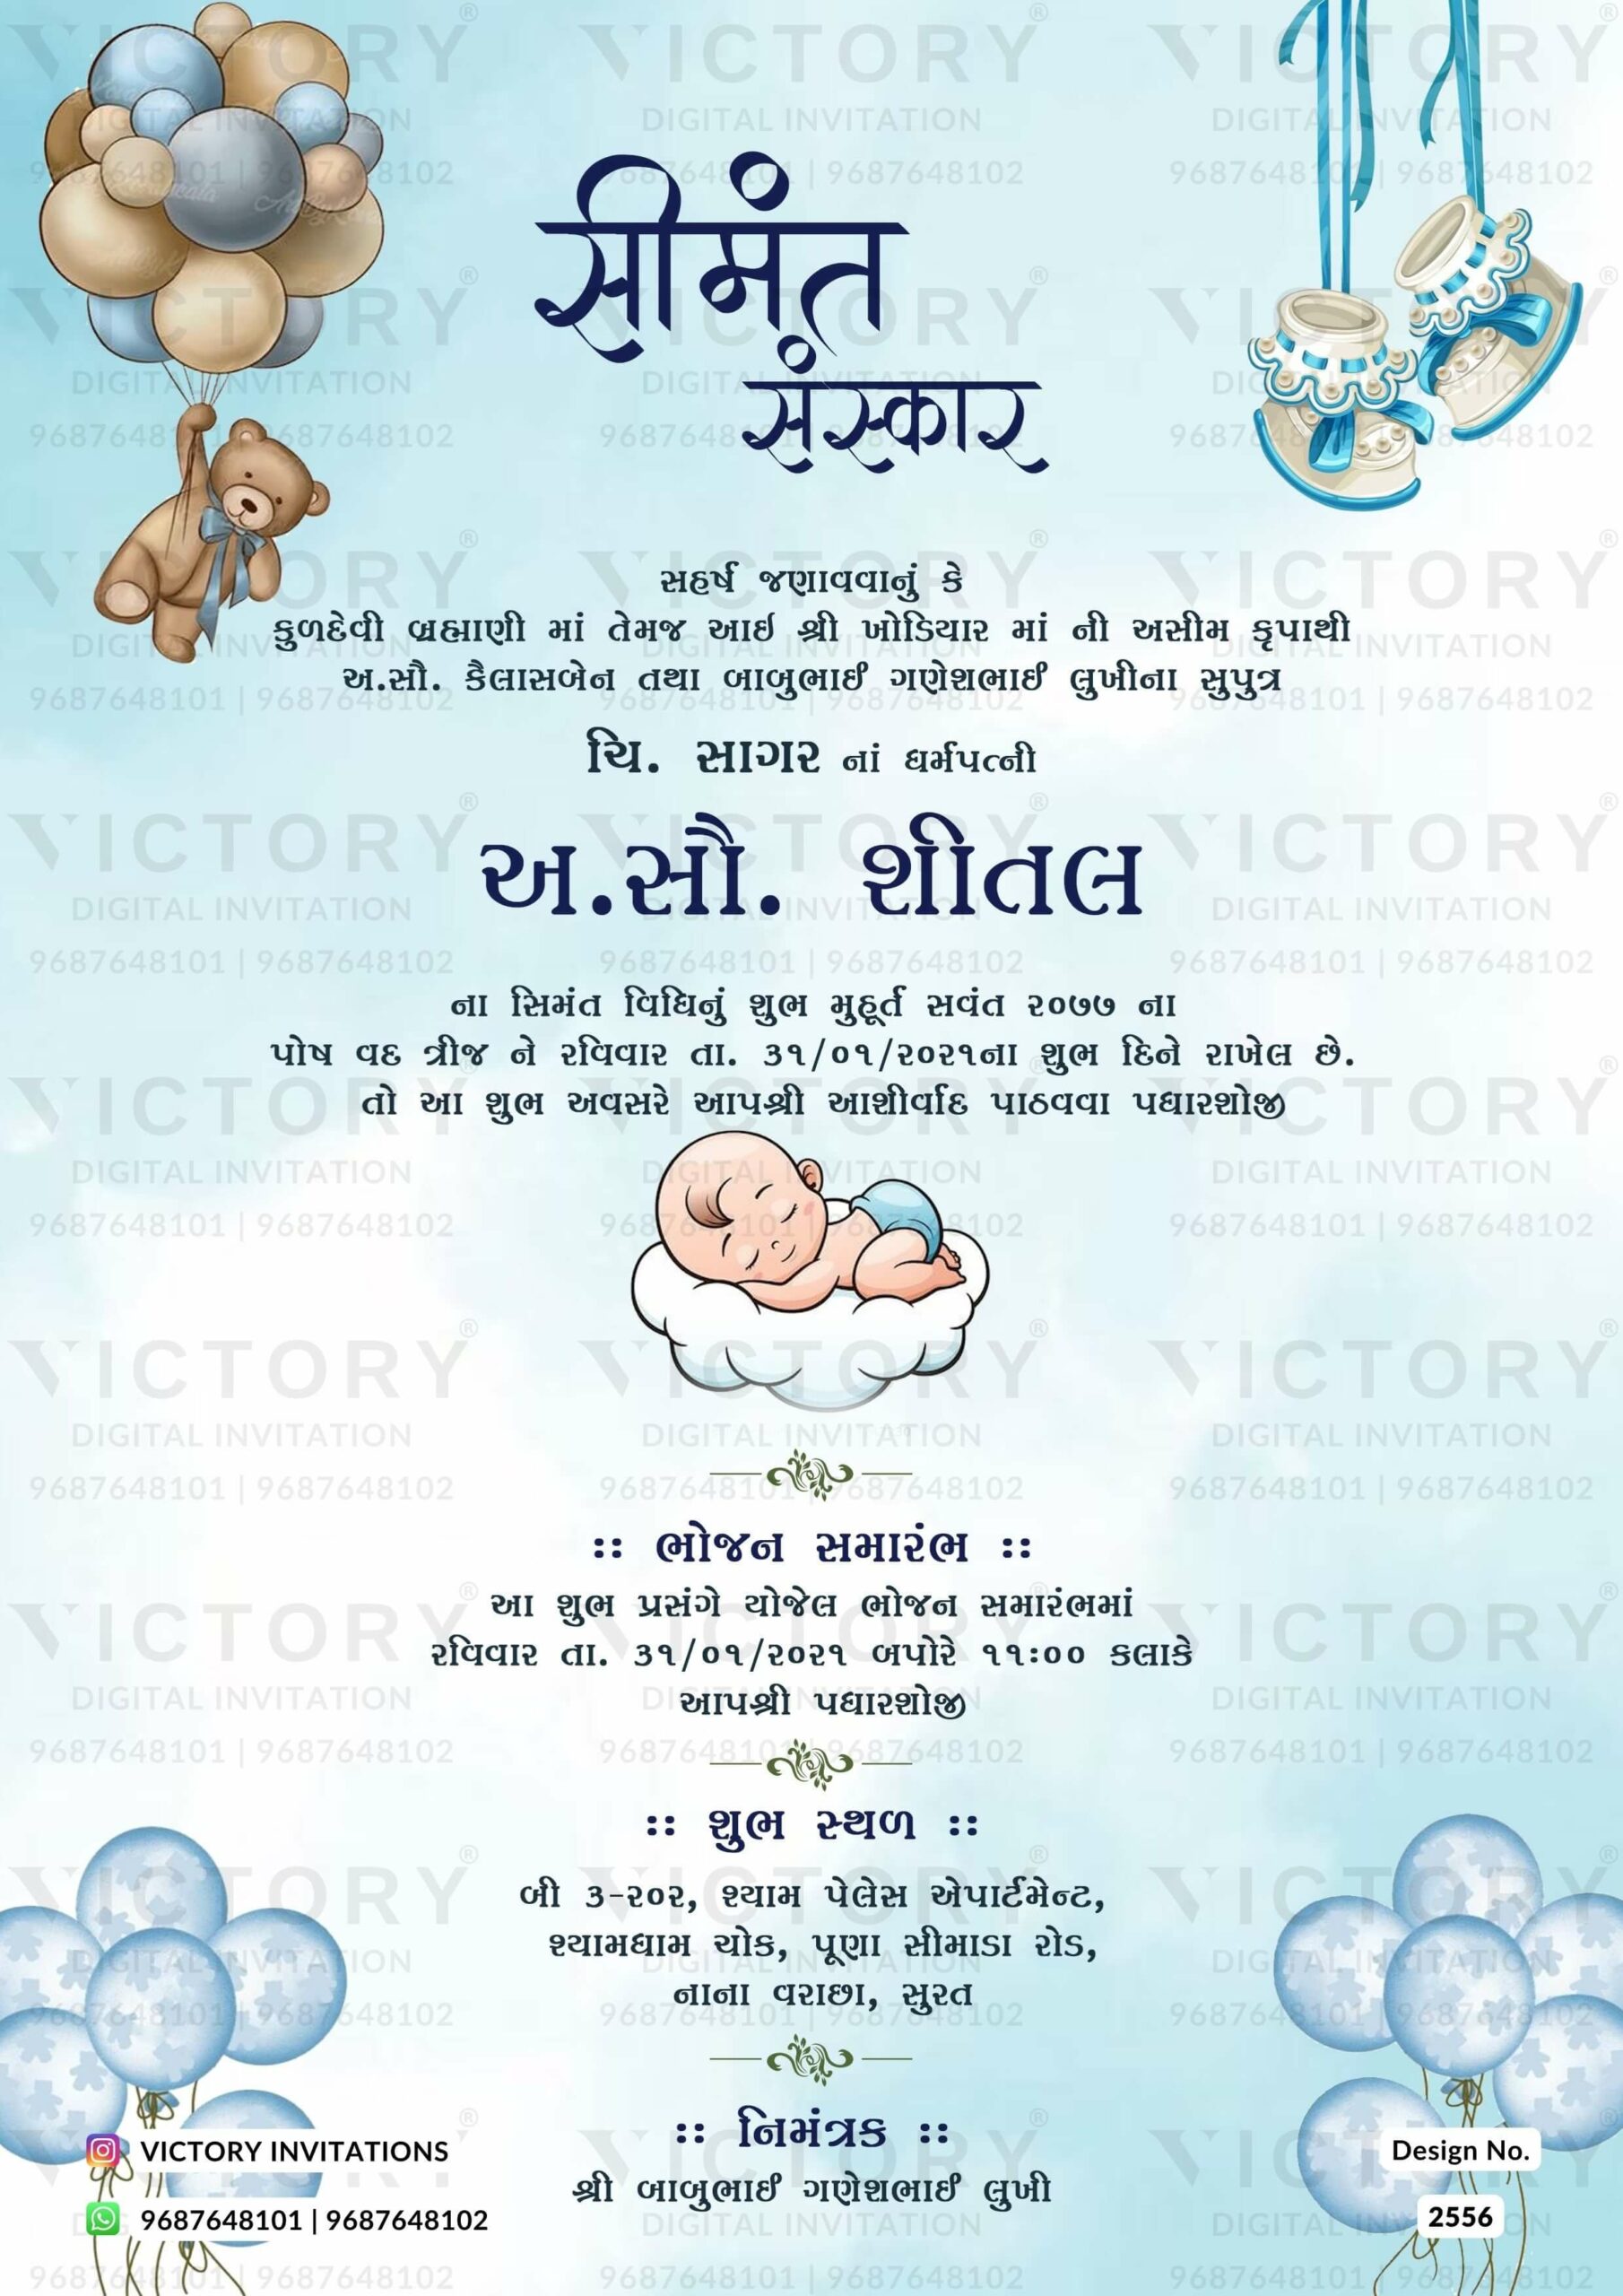 Fun theme Simant Vidhi baby shower digital invitation card in Gujarati language, design 2556